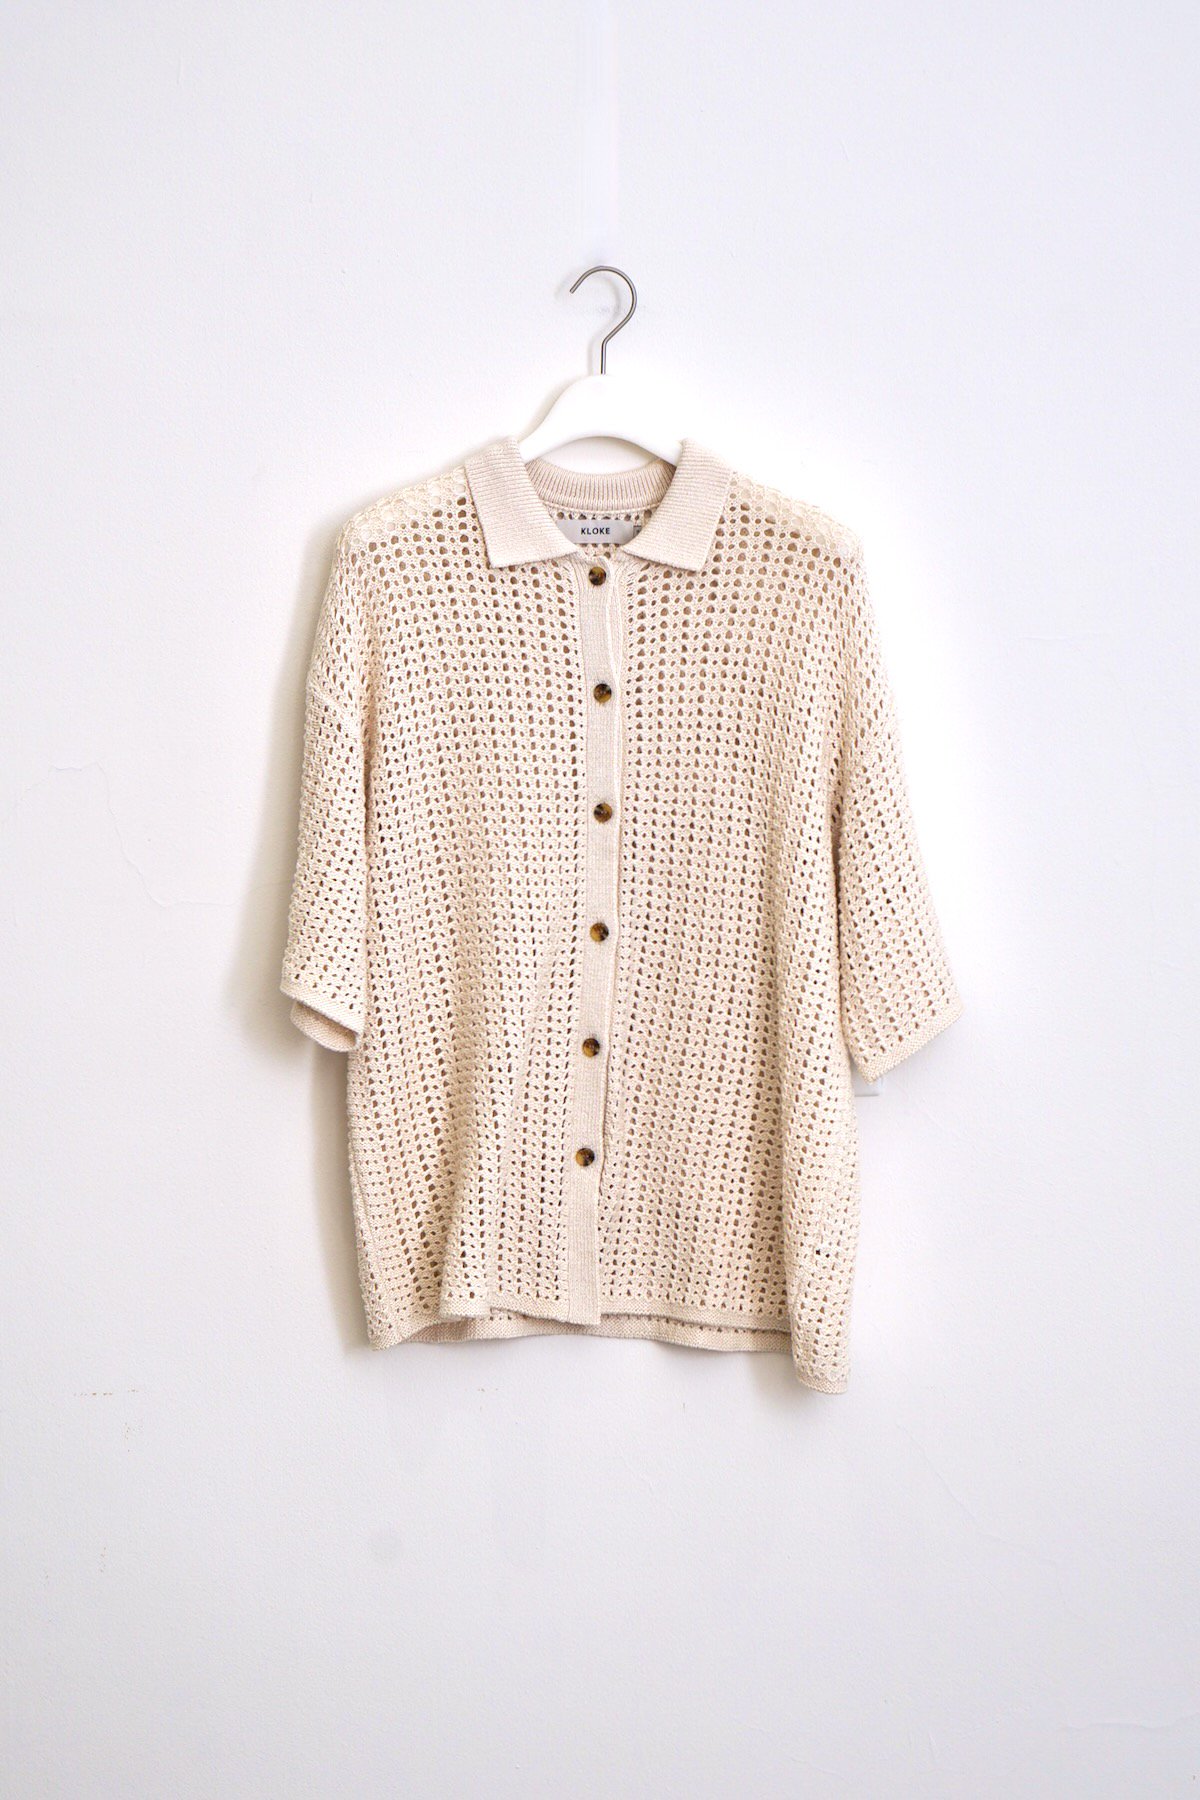 KLOKE / Shallows Knit Shirt / Ecru